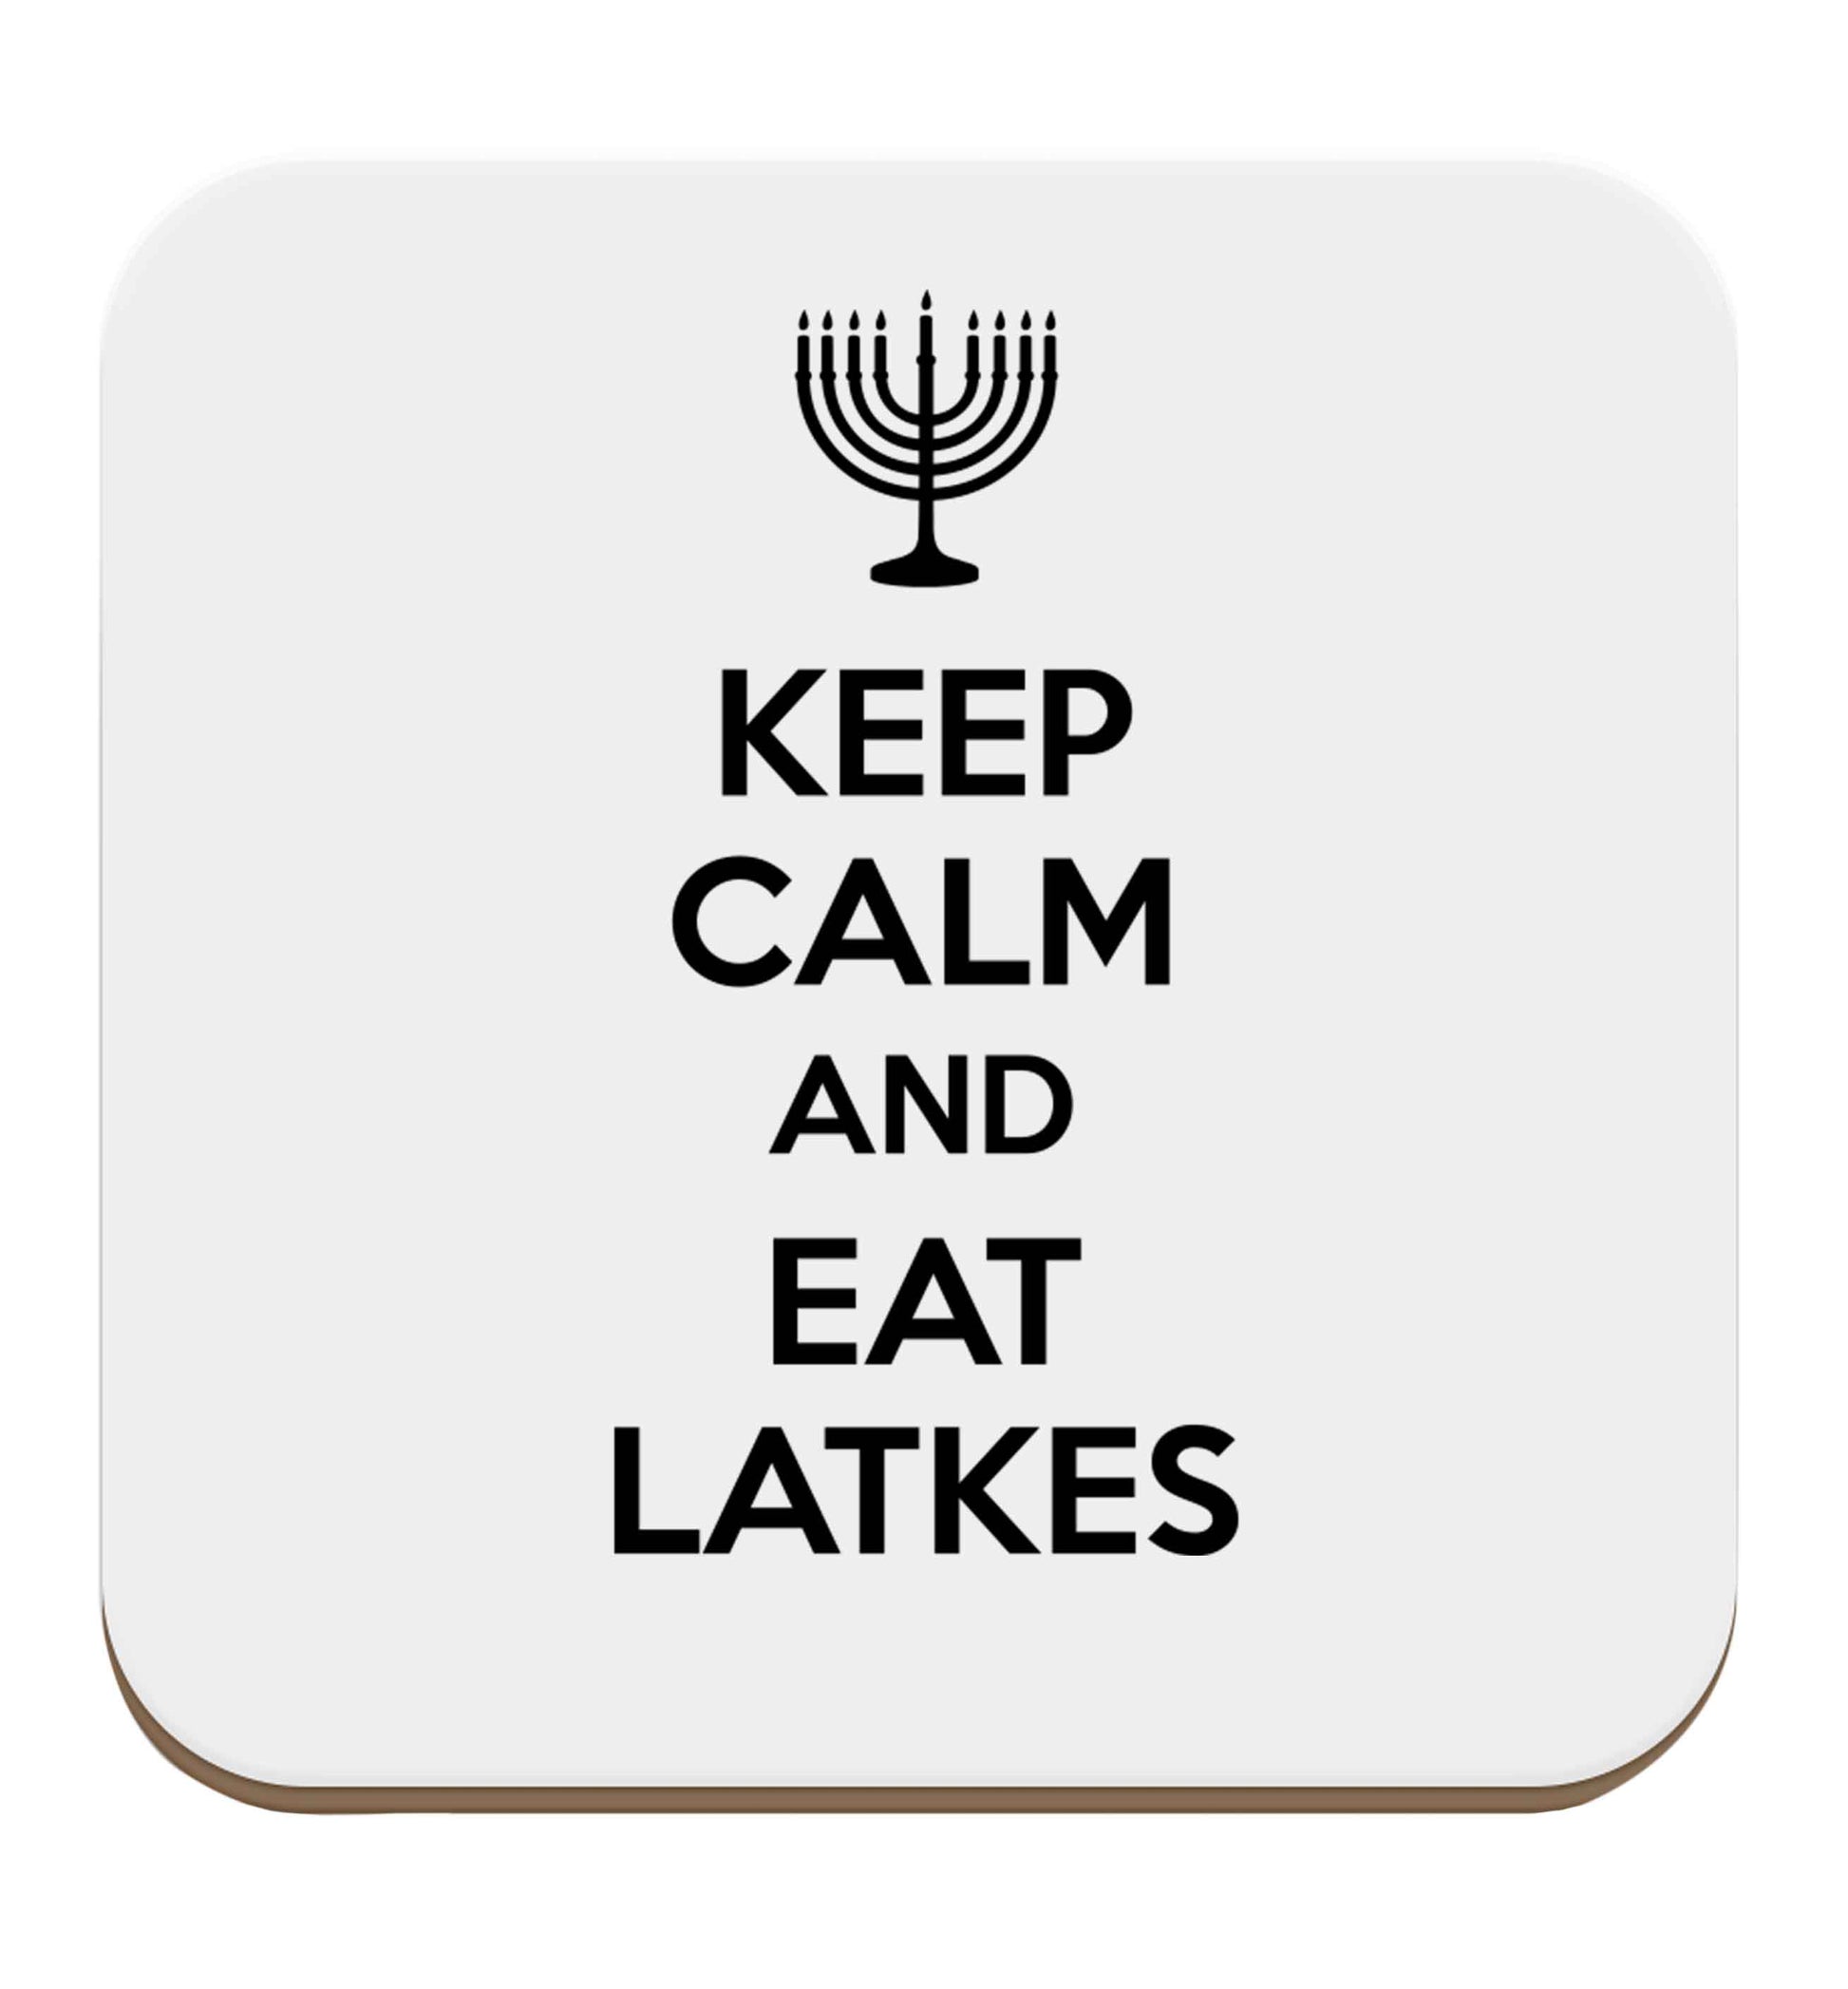 Keep calm and eat latkes set of four coasters